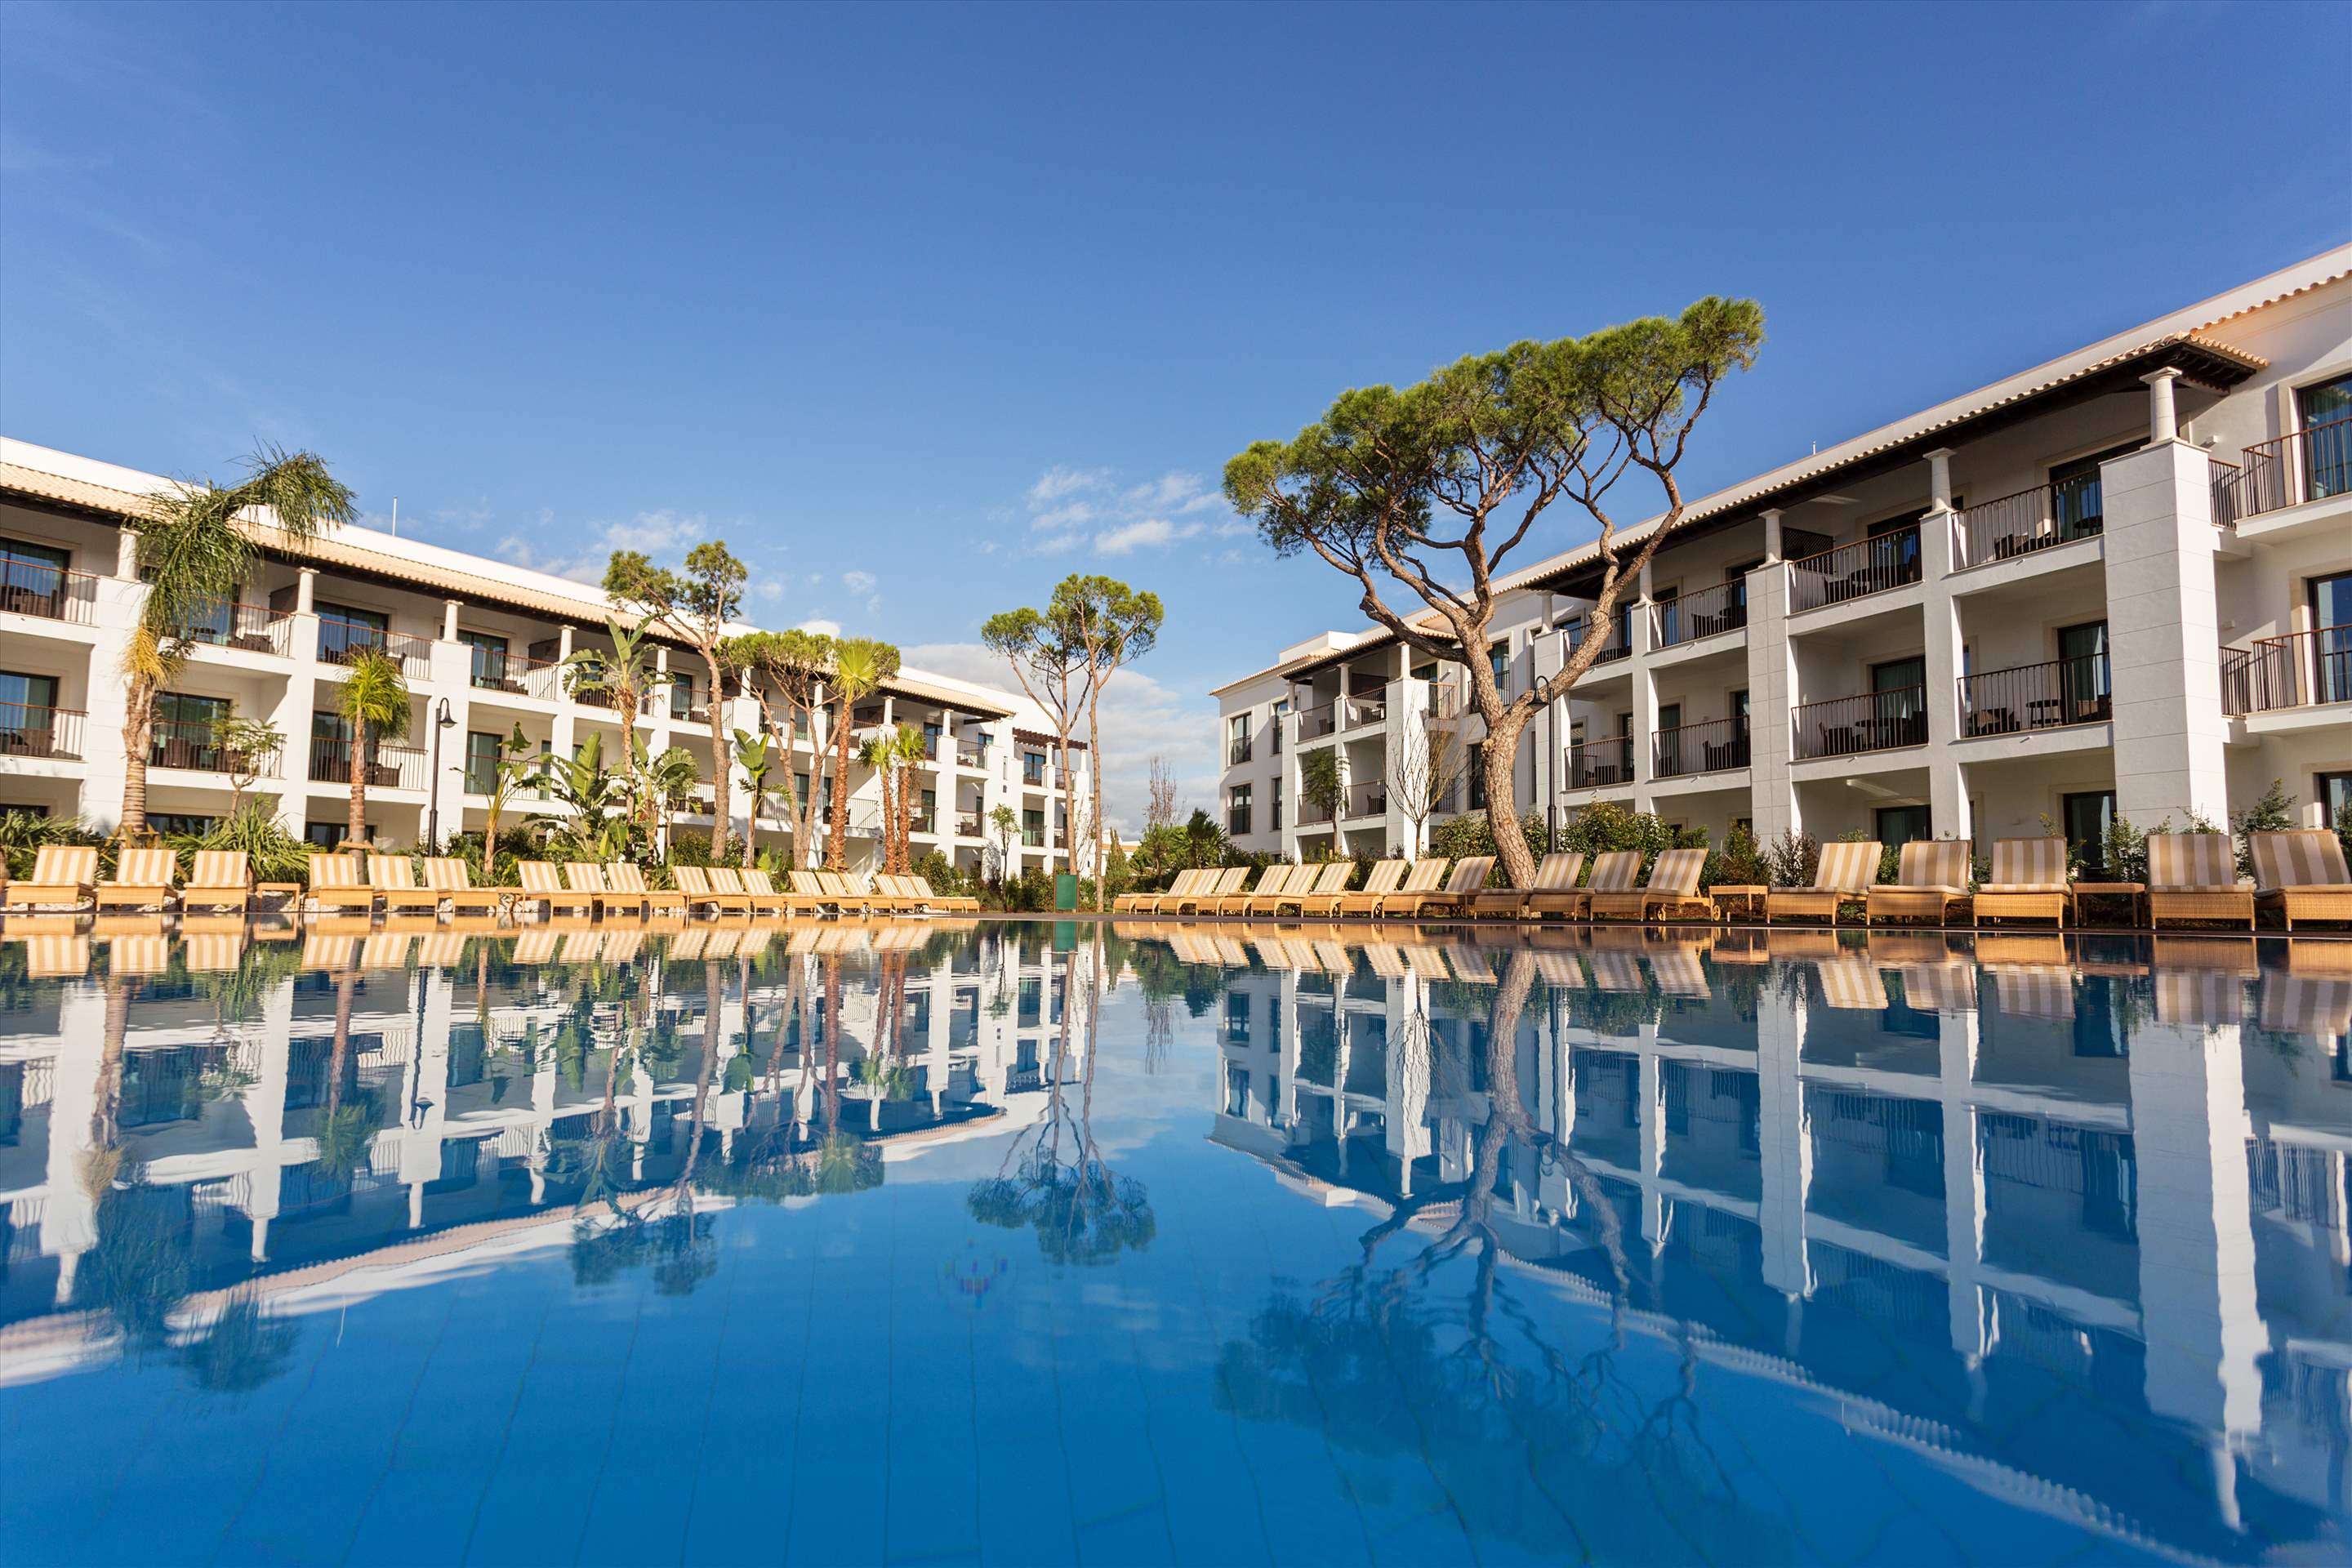 Pine Cliffs Gardens, Three Bedroom Suite, S/C Basis, 3 bedroom apartment in Pine Cliffs Resort, Algarve Photo #8